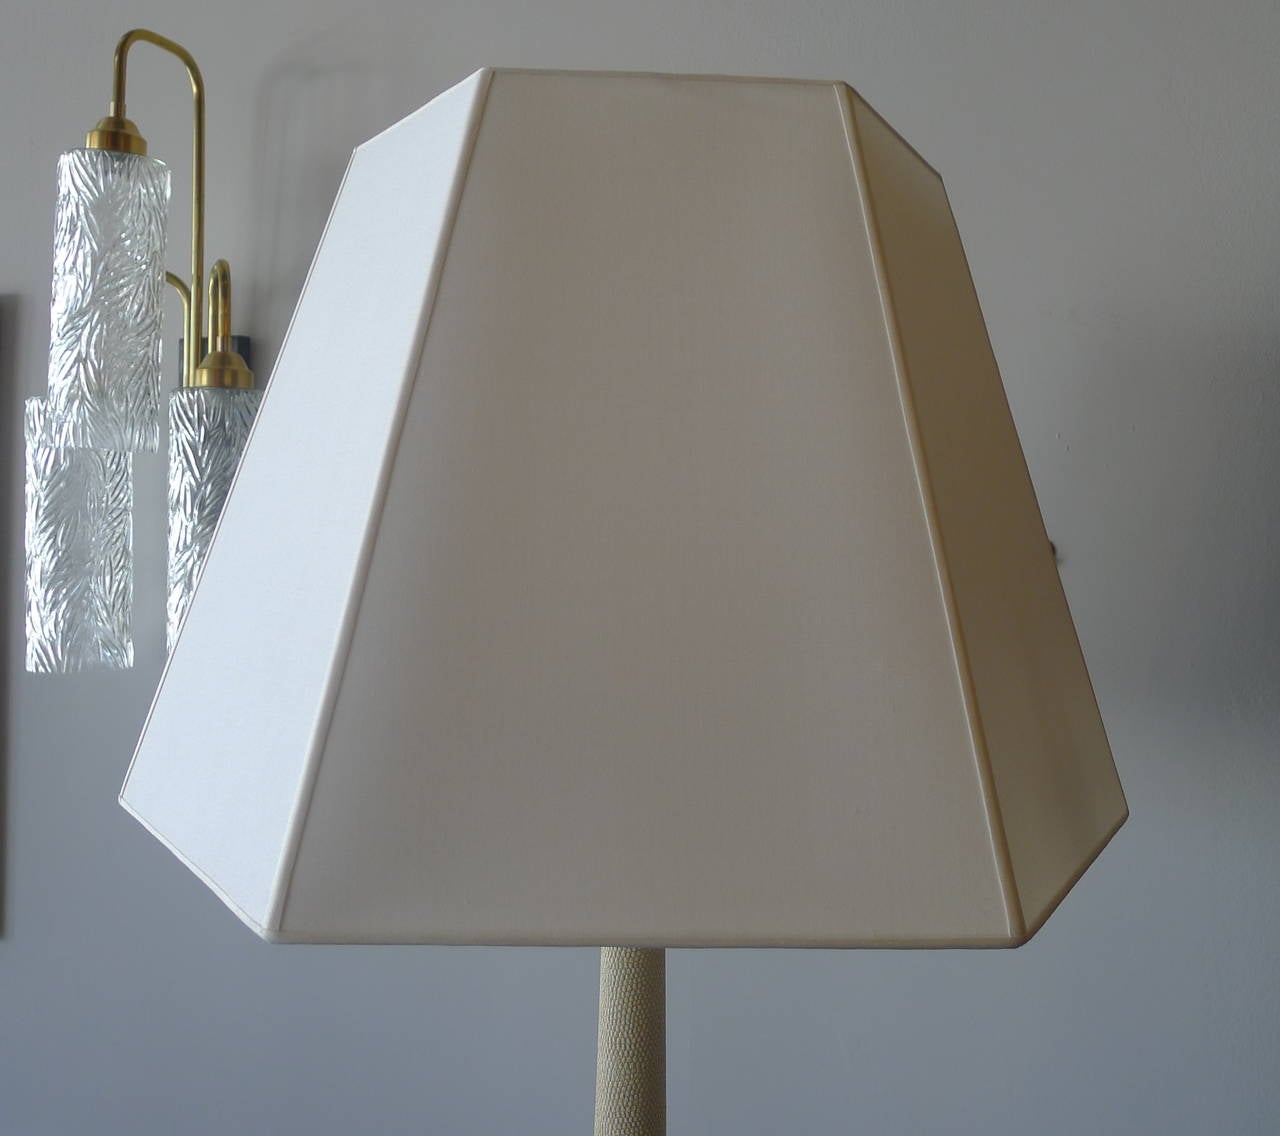 Paul Marra Faux Shagreen Floor Lamp 1940s Inspired, Cream For Sale 1